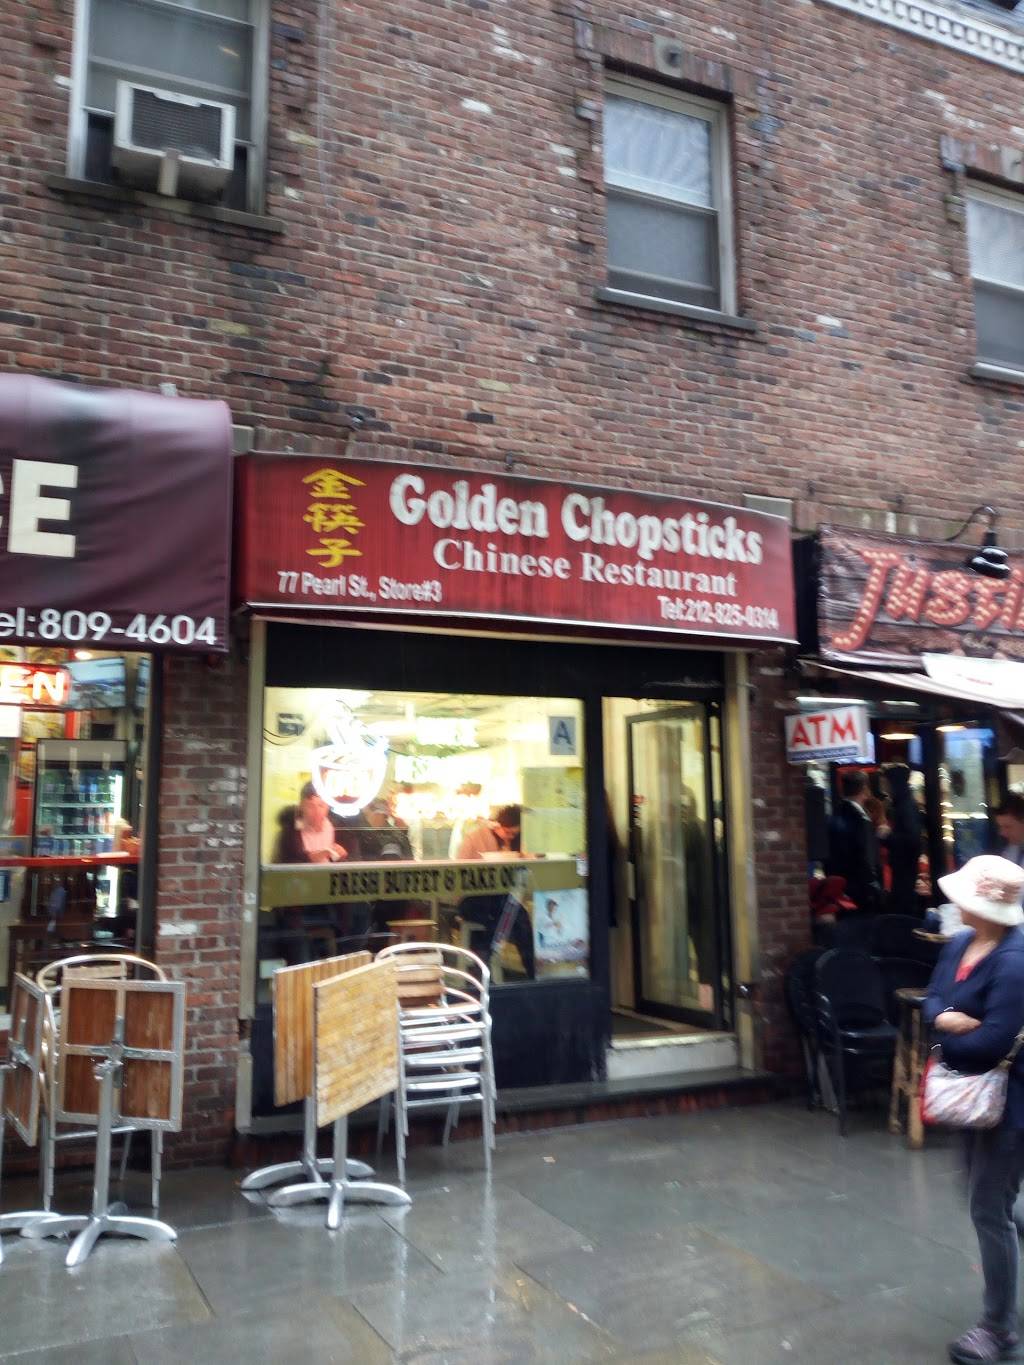 New Golden Chopsticks | restaurant | 77 Pearl St #3, New York, NY 10004, USA | 2128250314 OR +1 212-825-0314